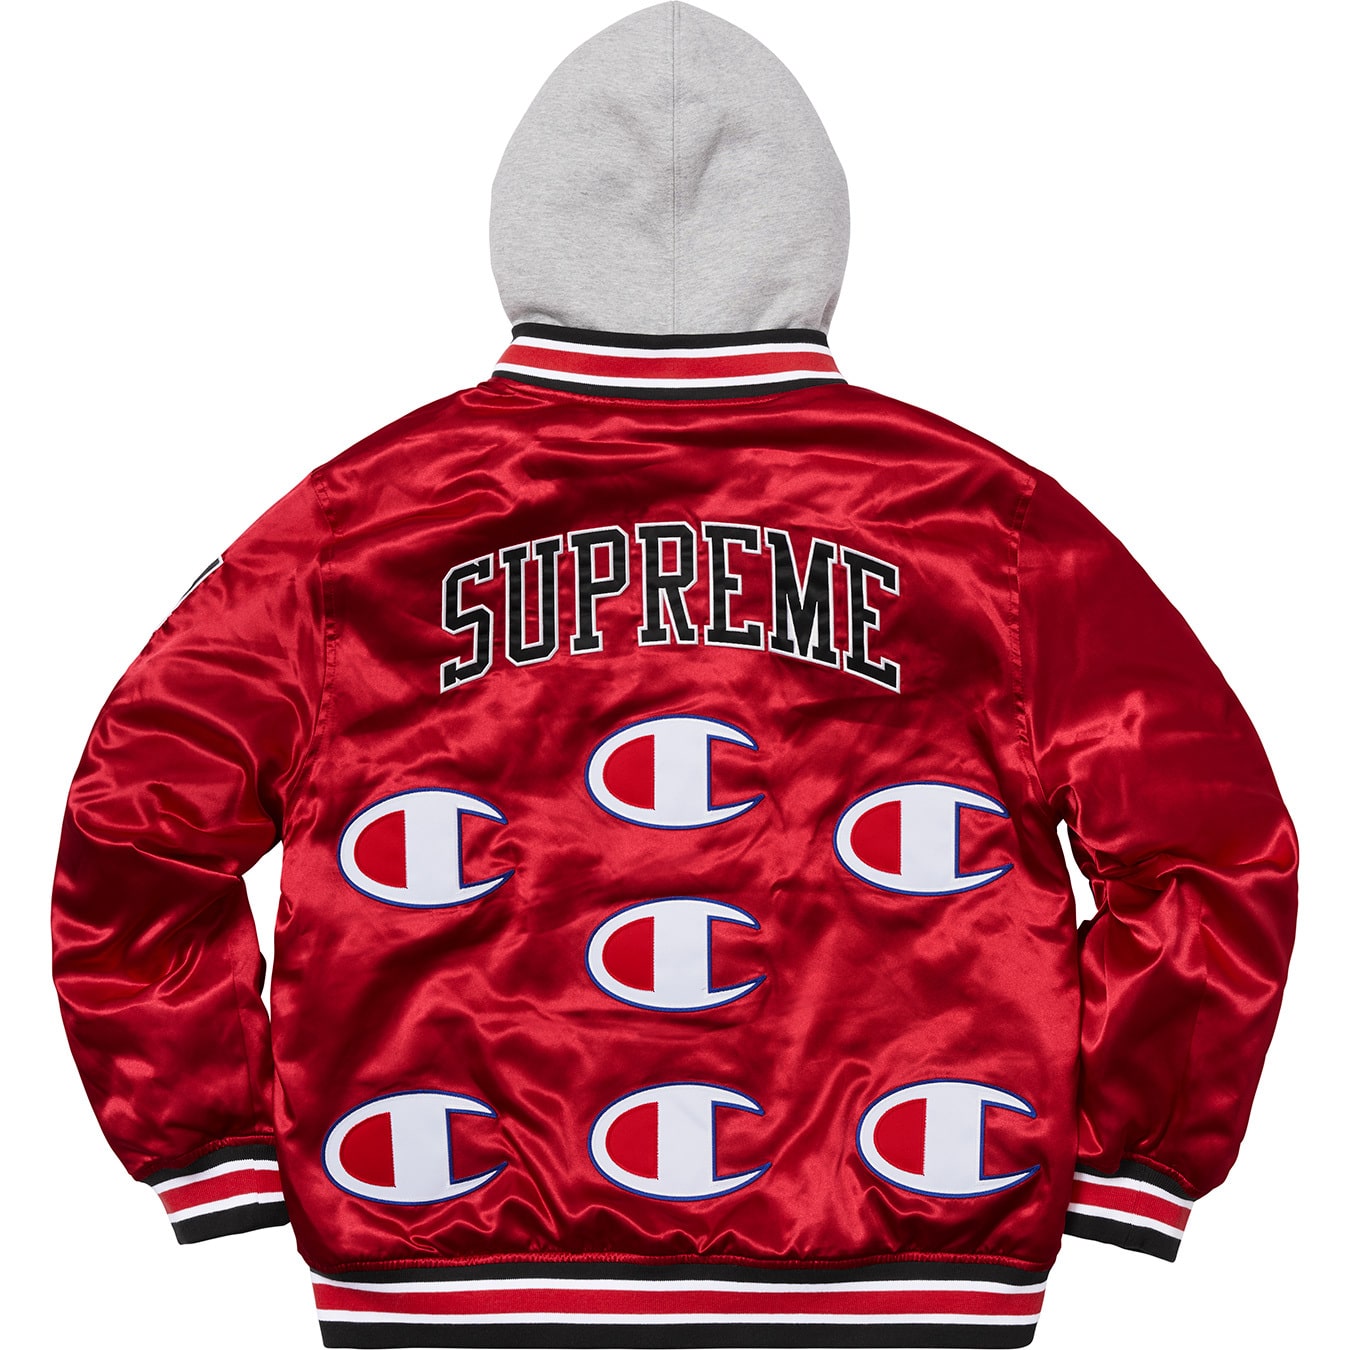 supreme champion hooded jacket